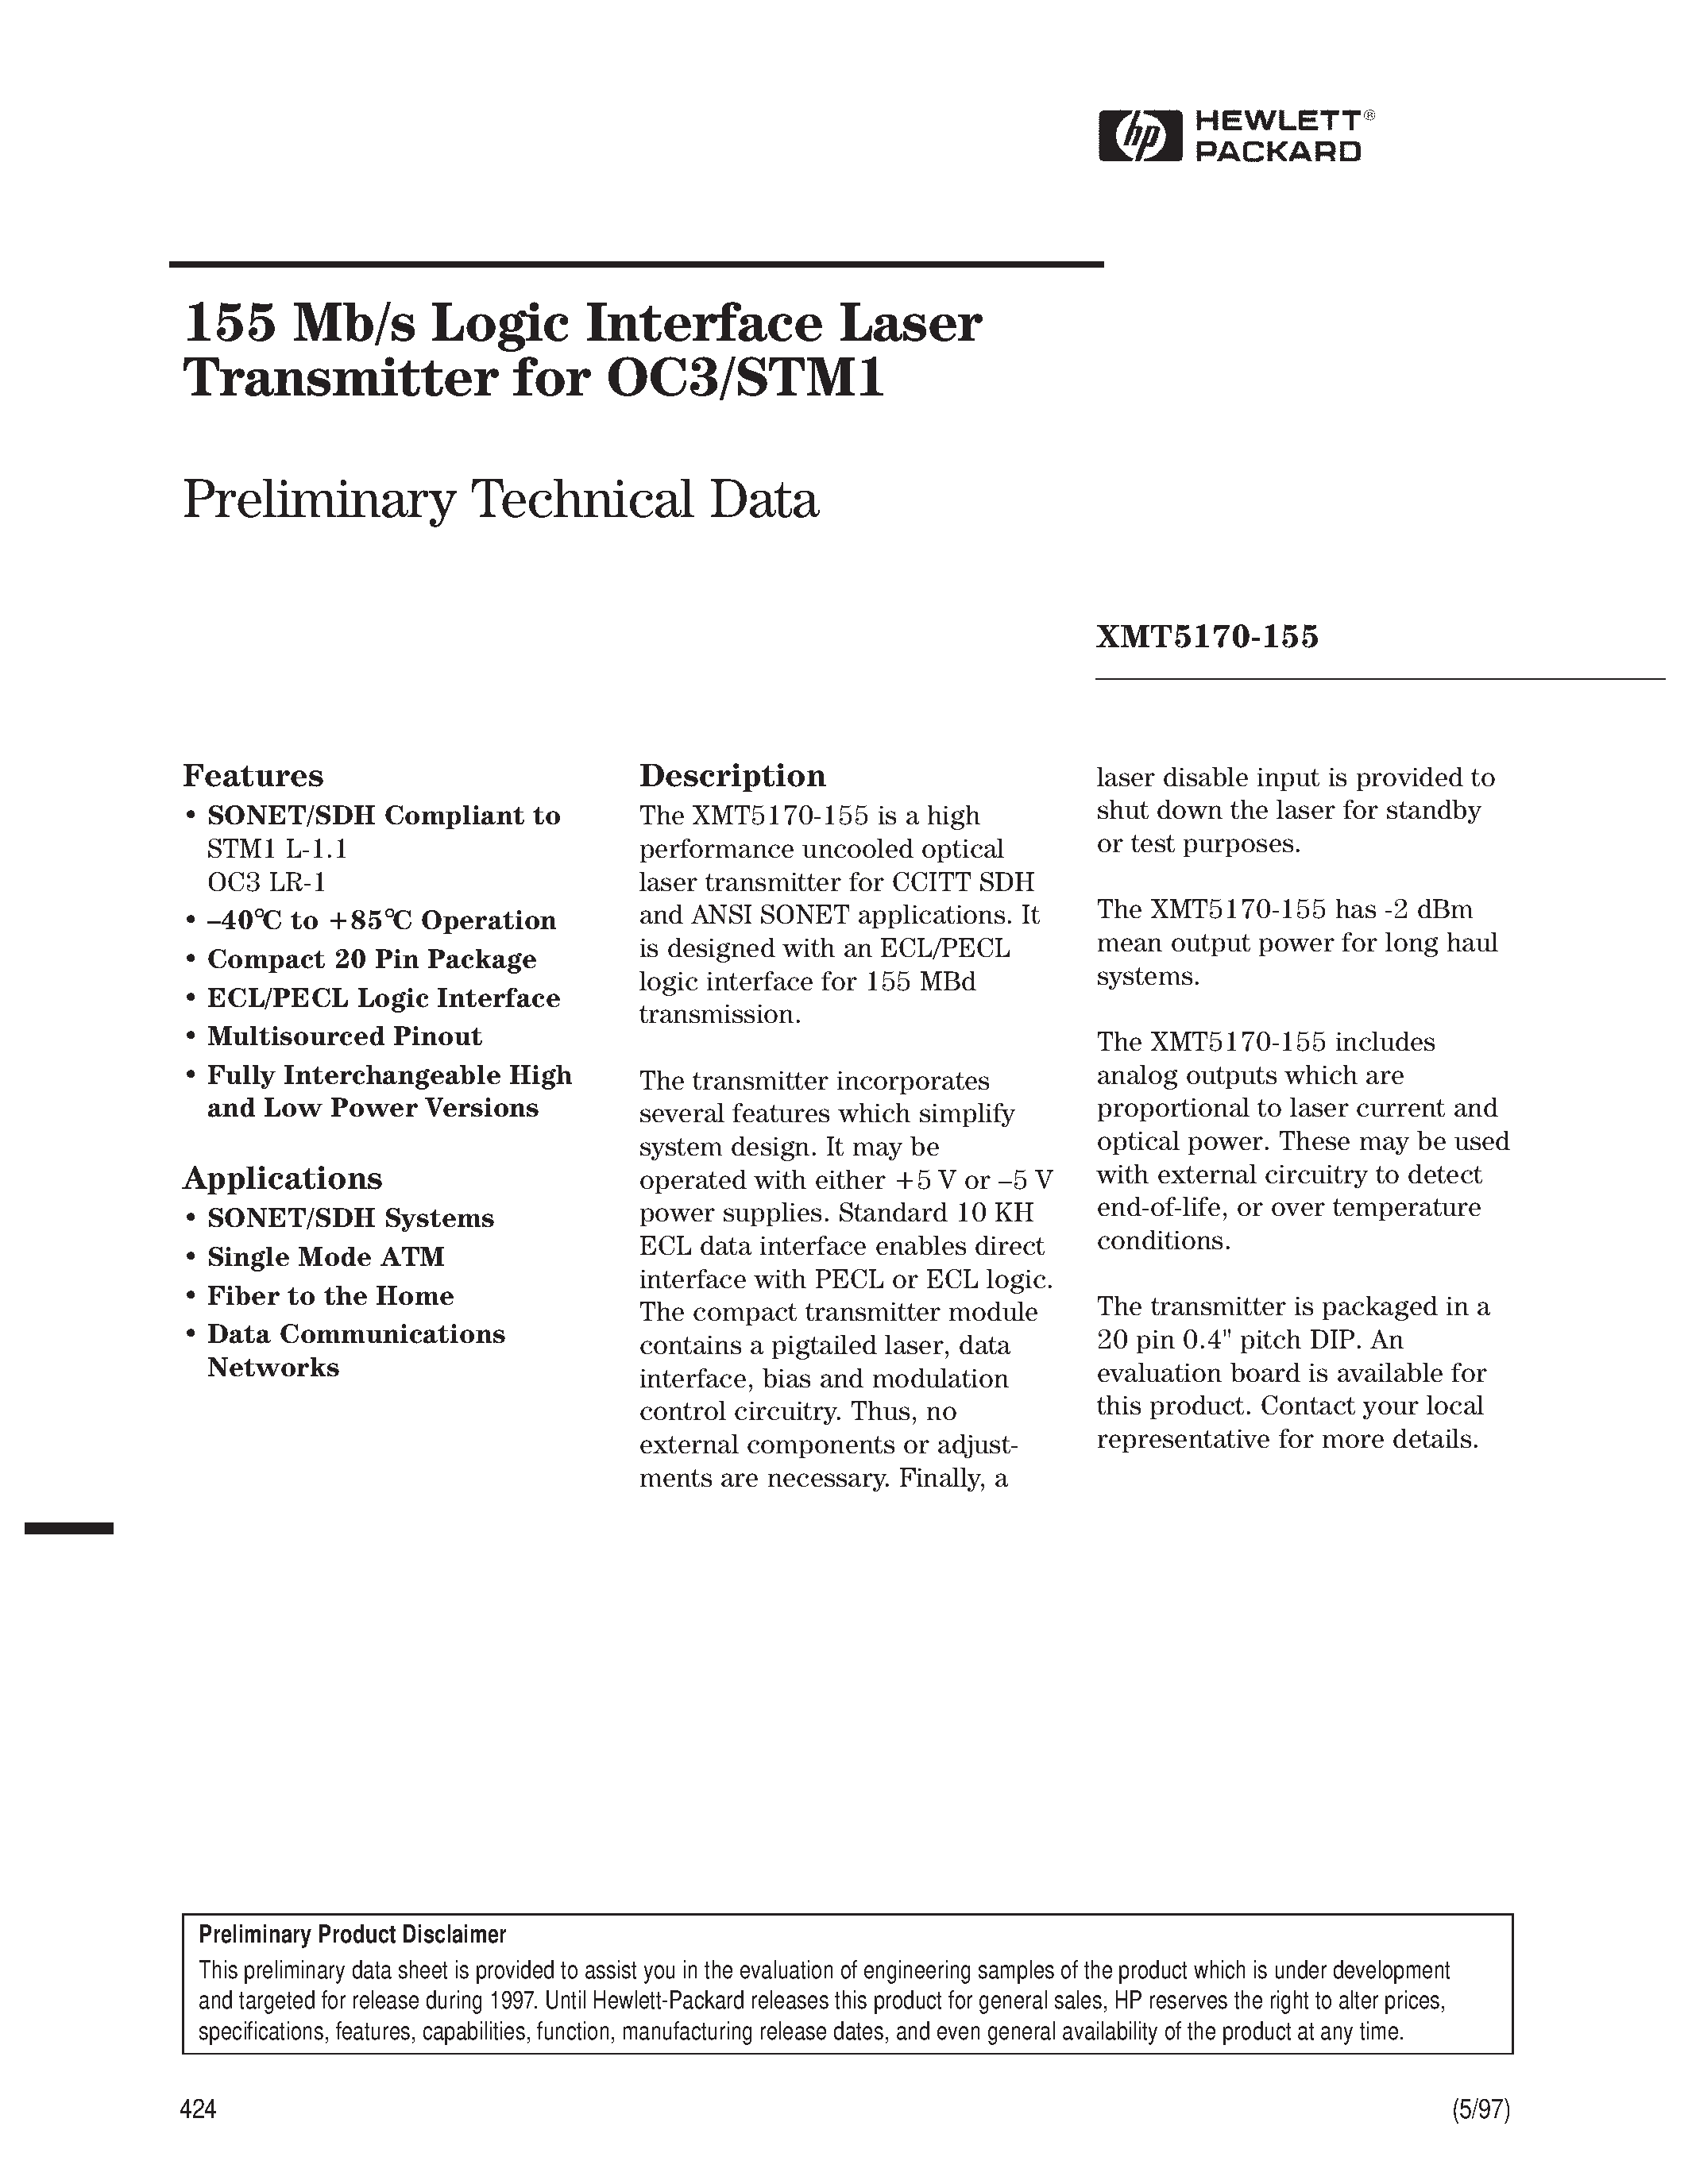 Datasheet XMT5170B-155-SC - 155 Mb/s Logic Interface Laser Transmitter for OC3/STM1 page 1